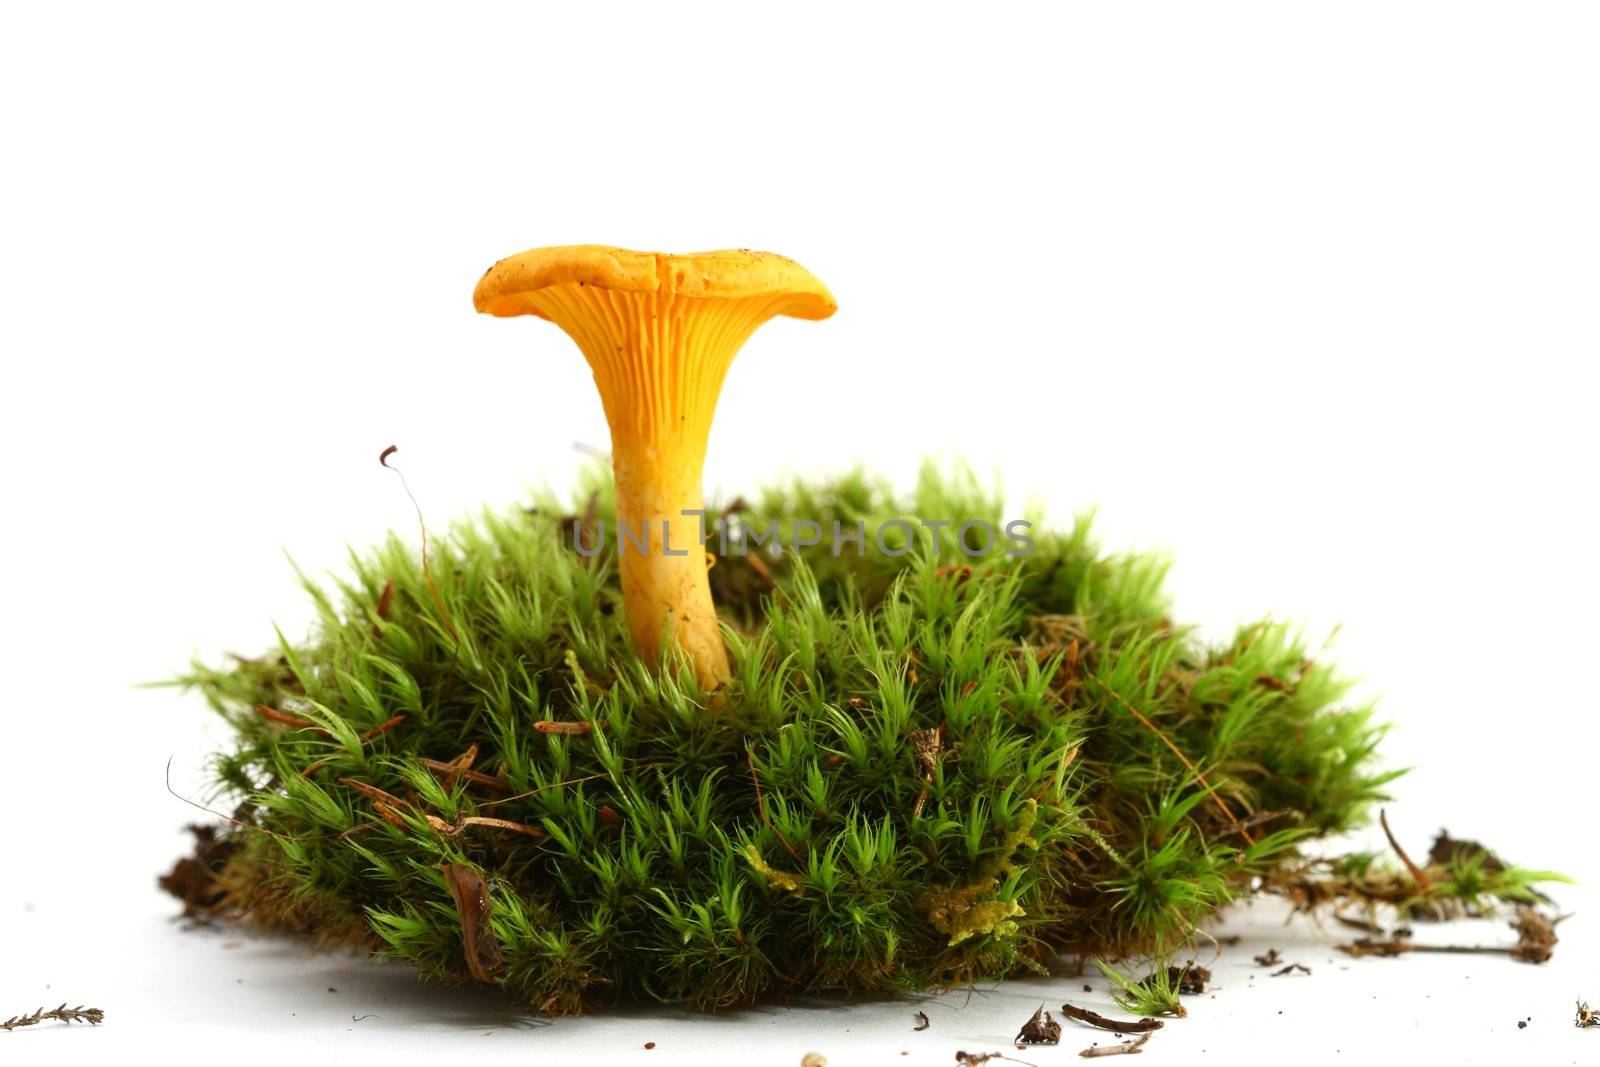 isolated mushroom by Yellowj